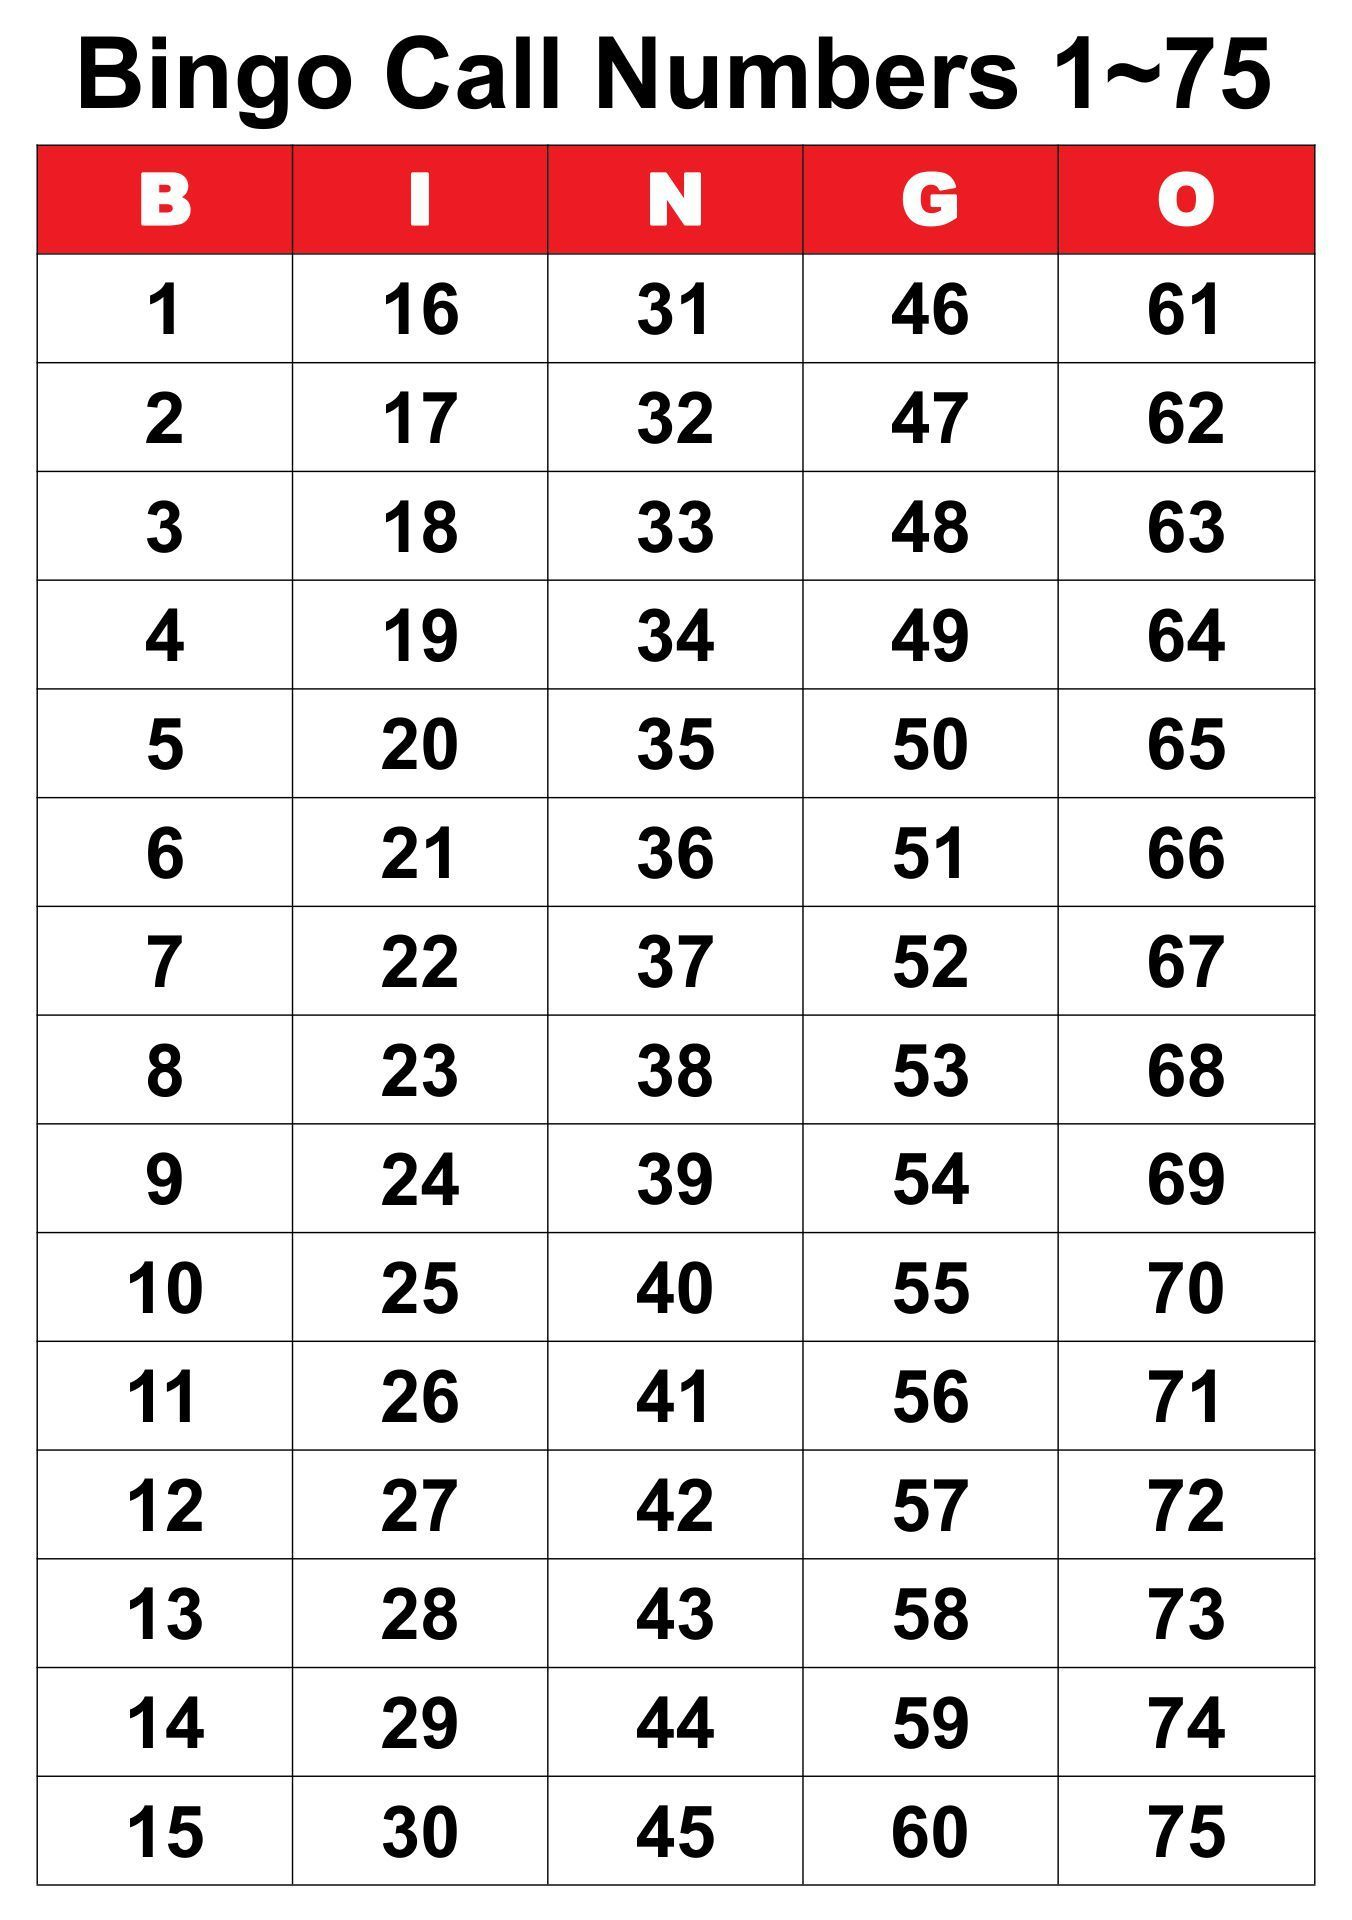 Free Printable Bingo Cards 1 75 | Free Printable Bingo Cards - Free Printable Bingo Cards 1-75